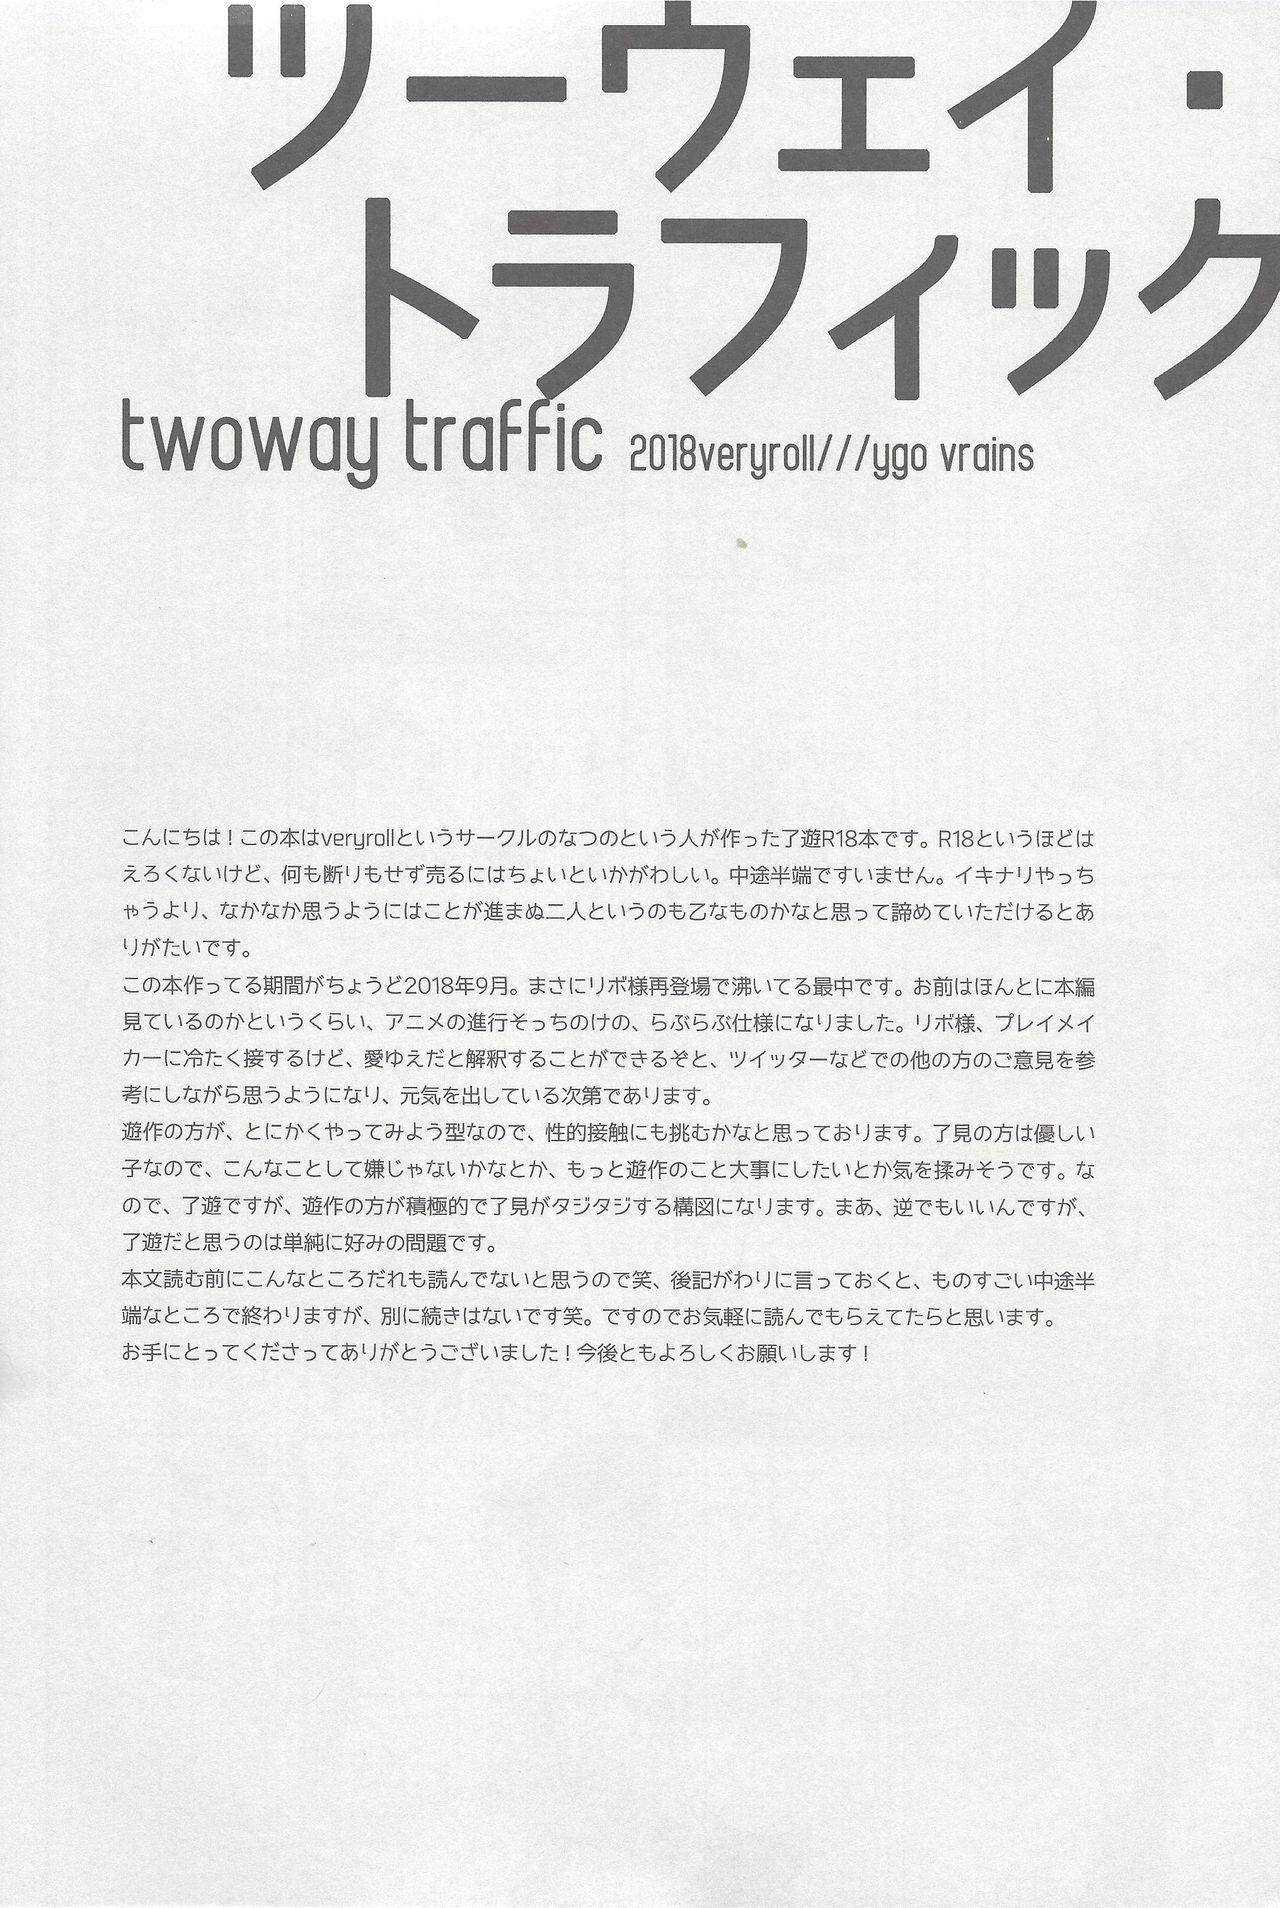 twoway traffic 2